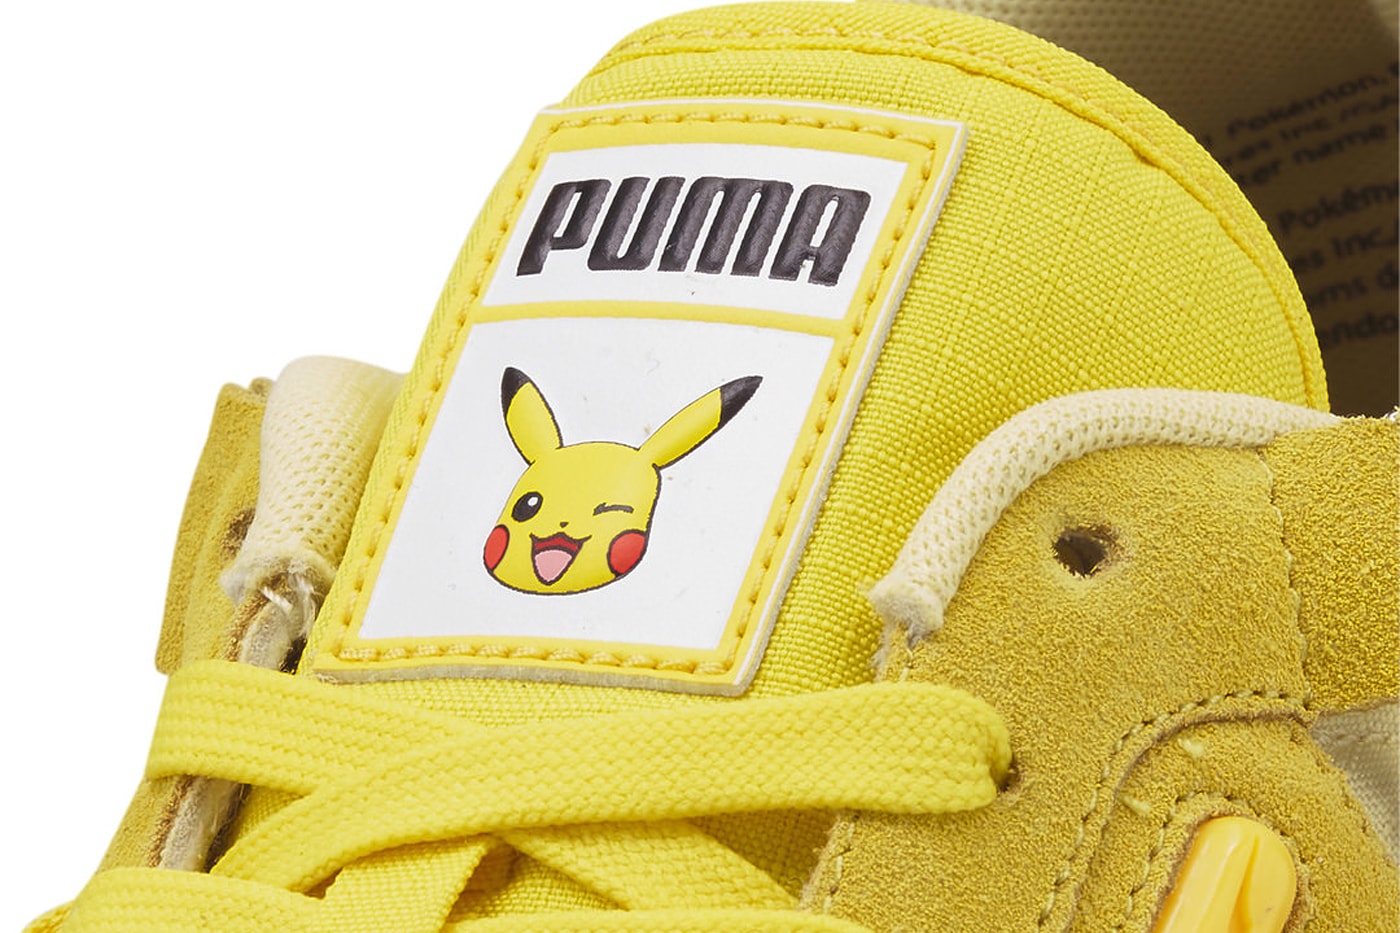 Pokémon x PUMA Footwear Collection Release